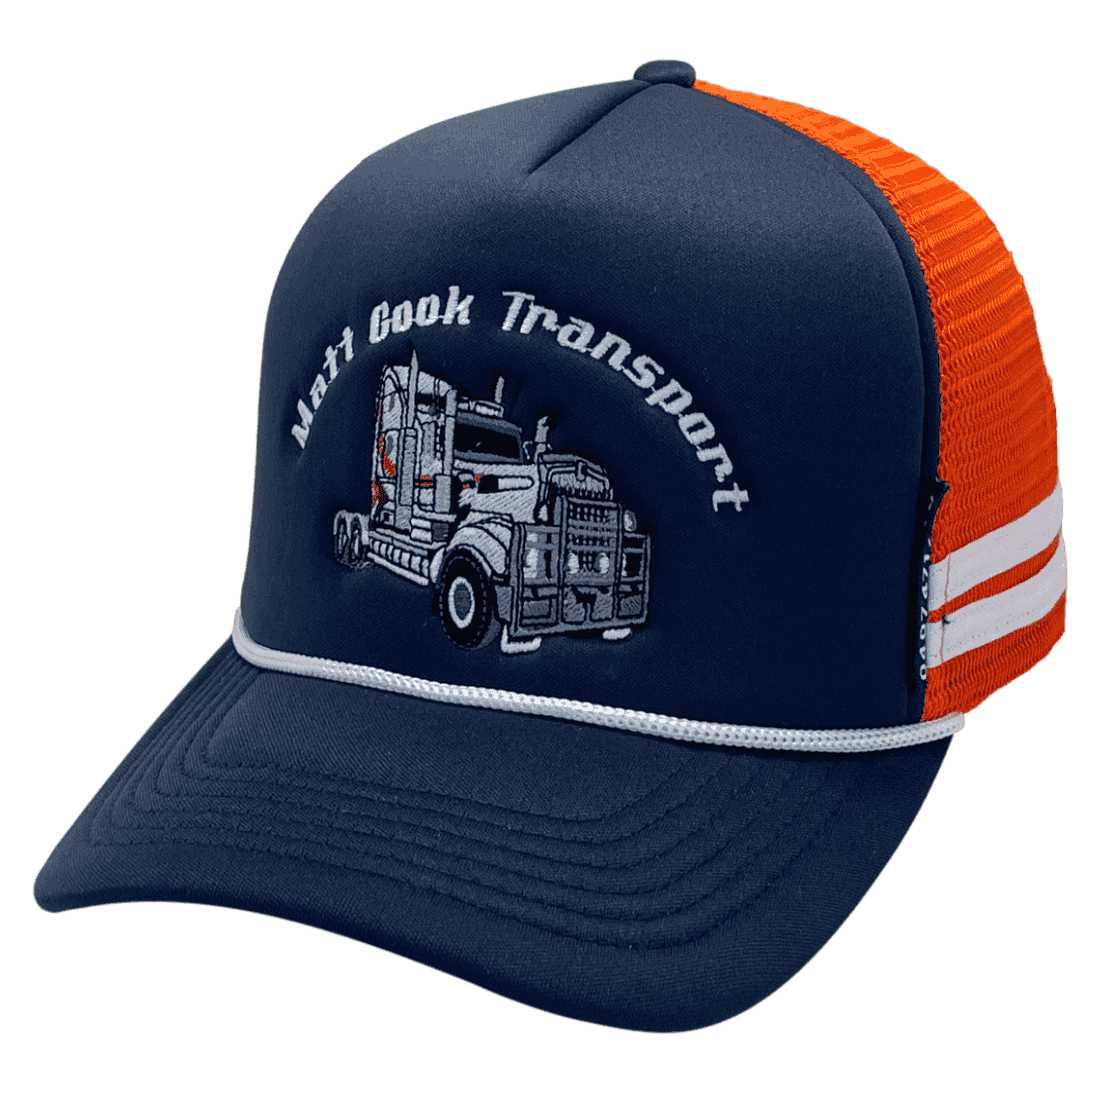 Matt Cook Transport Harvey WA HP Original Foamie Aussie Trucker Hat with Australian Head Fit Crown Size and 2 Side Bands